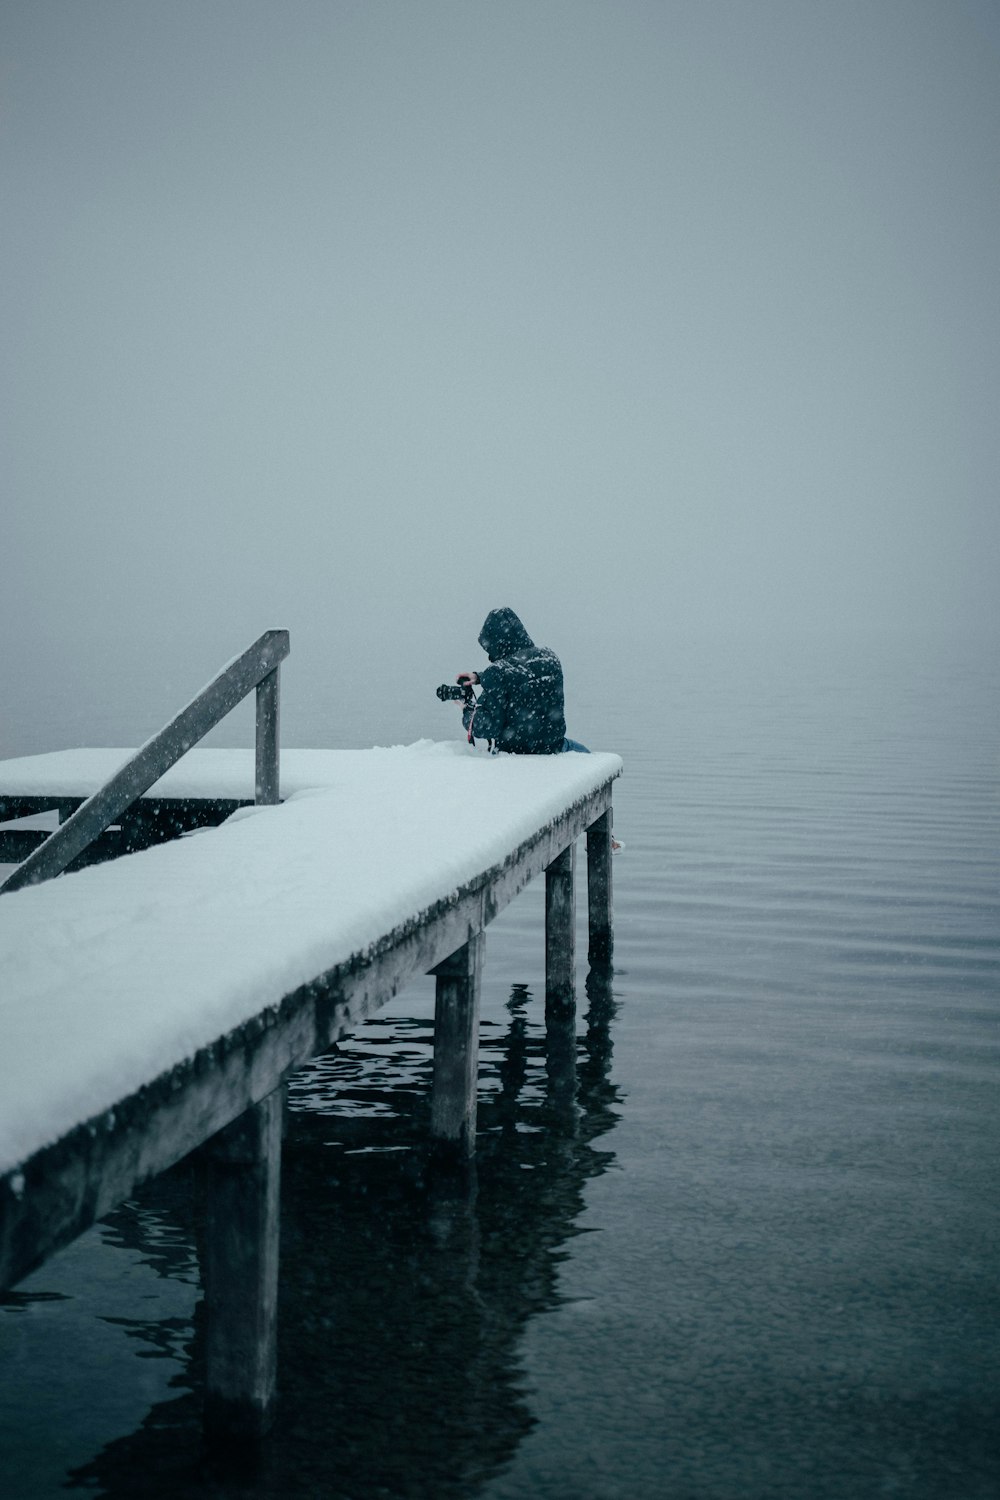 man in black jacket sitting on wooden dock